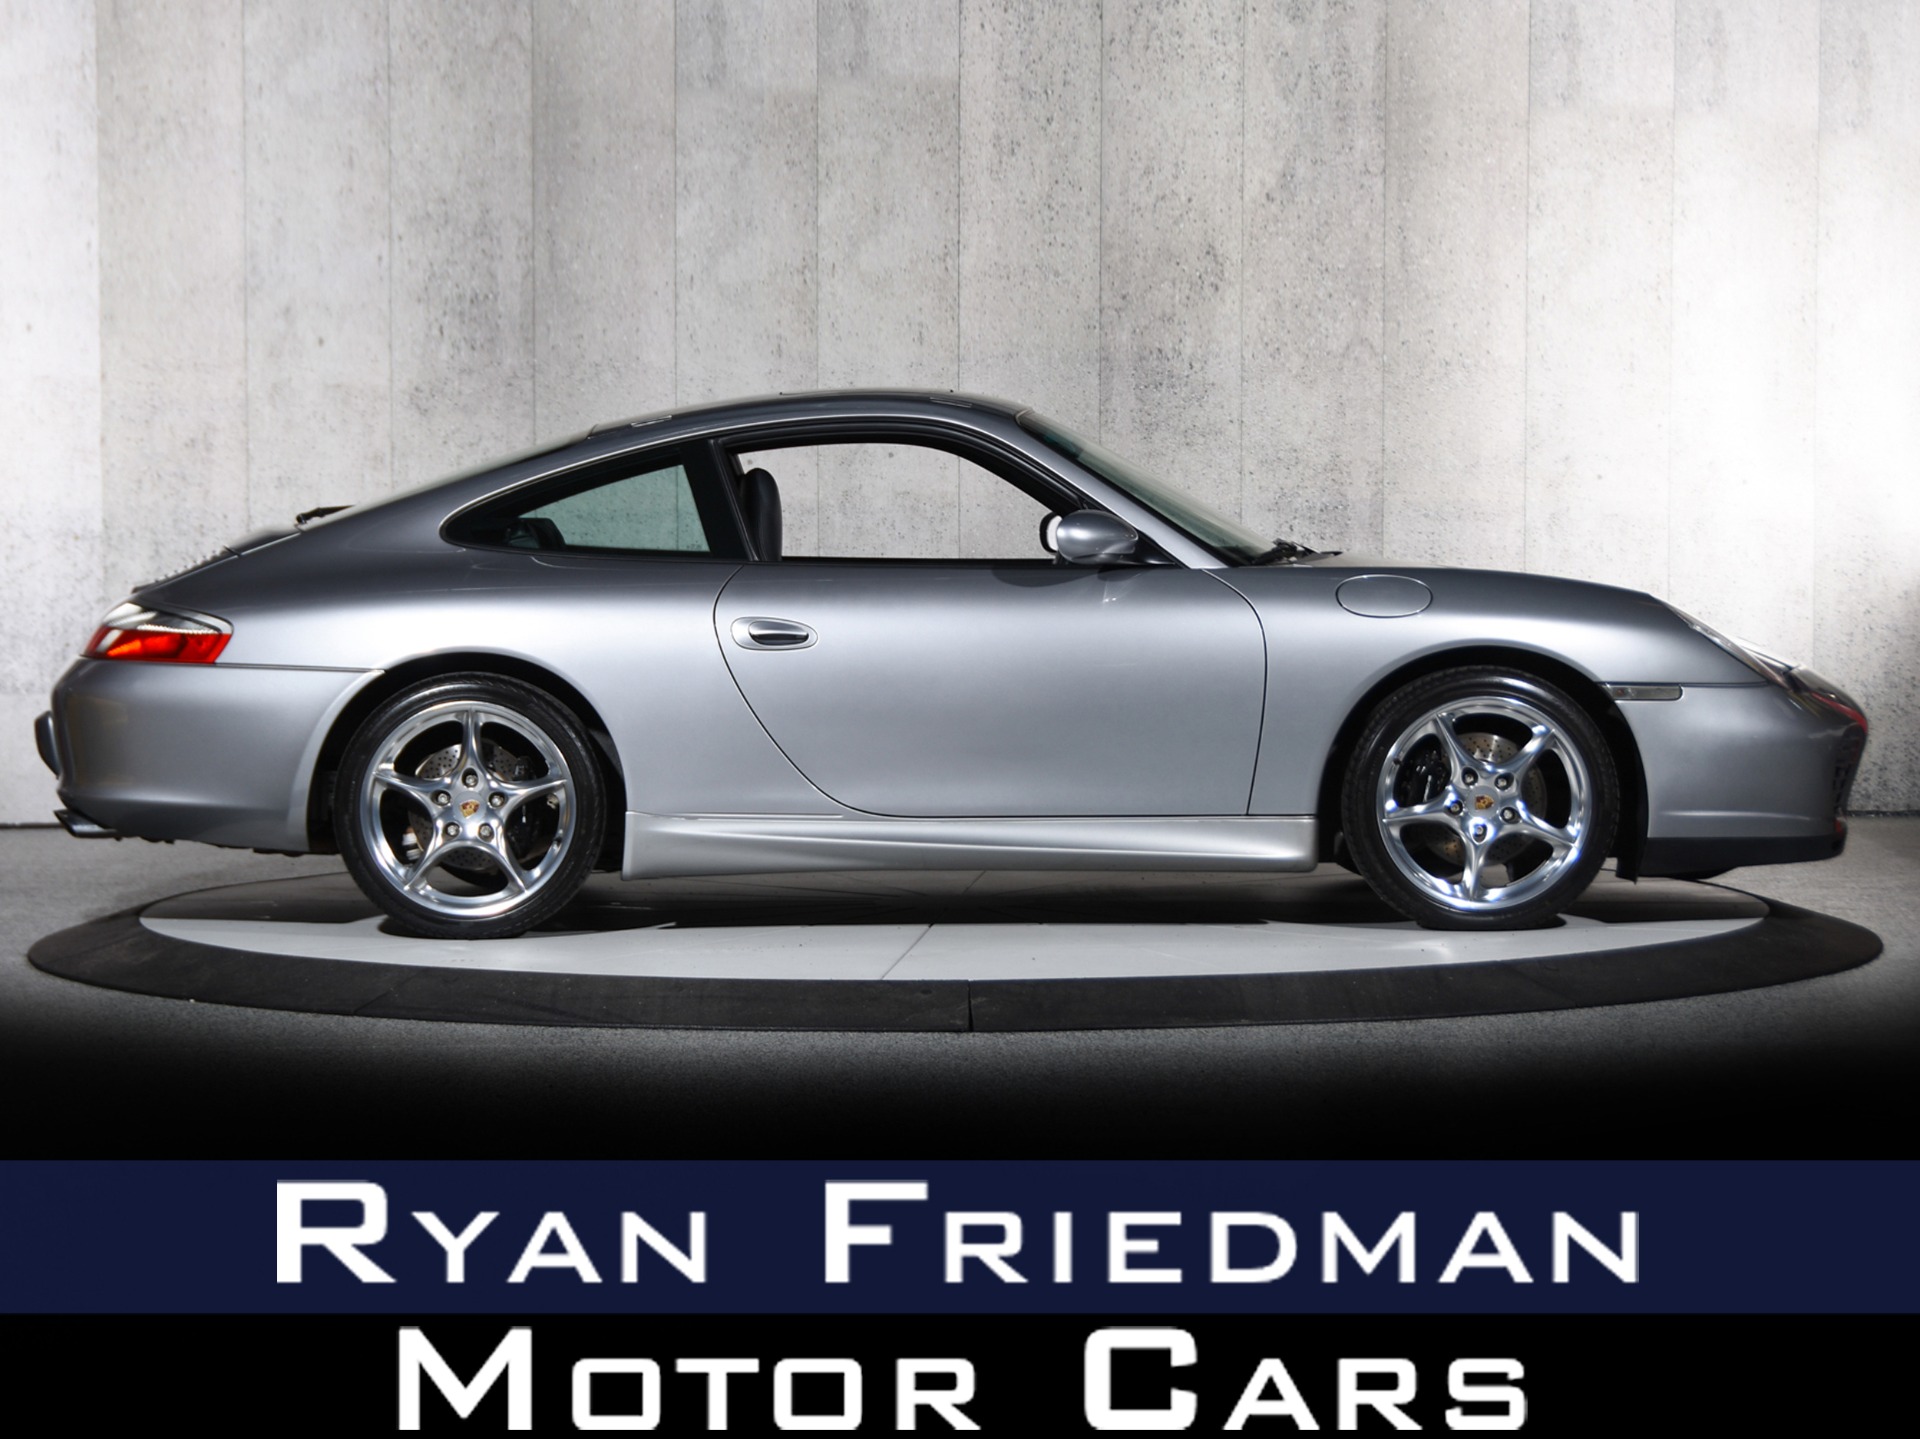 Used 2004 Porsche 911 Carrera Stock Ryan LLC #1351 Motor 40th (Sold) For Sale Anniversary Friedman Cars Edition 